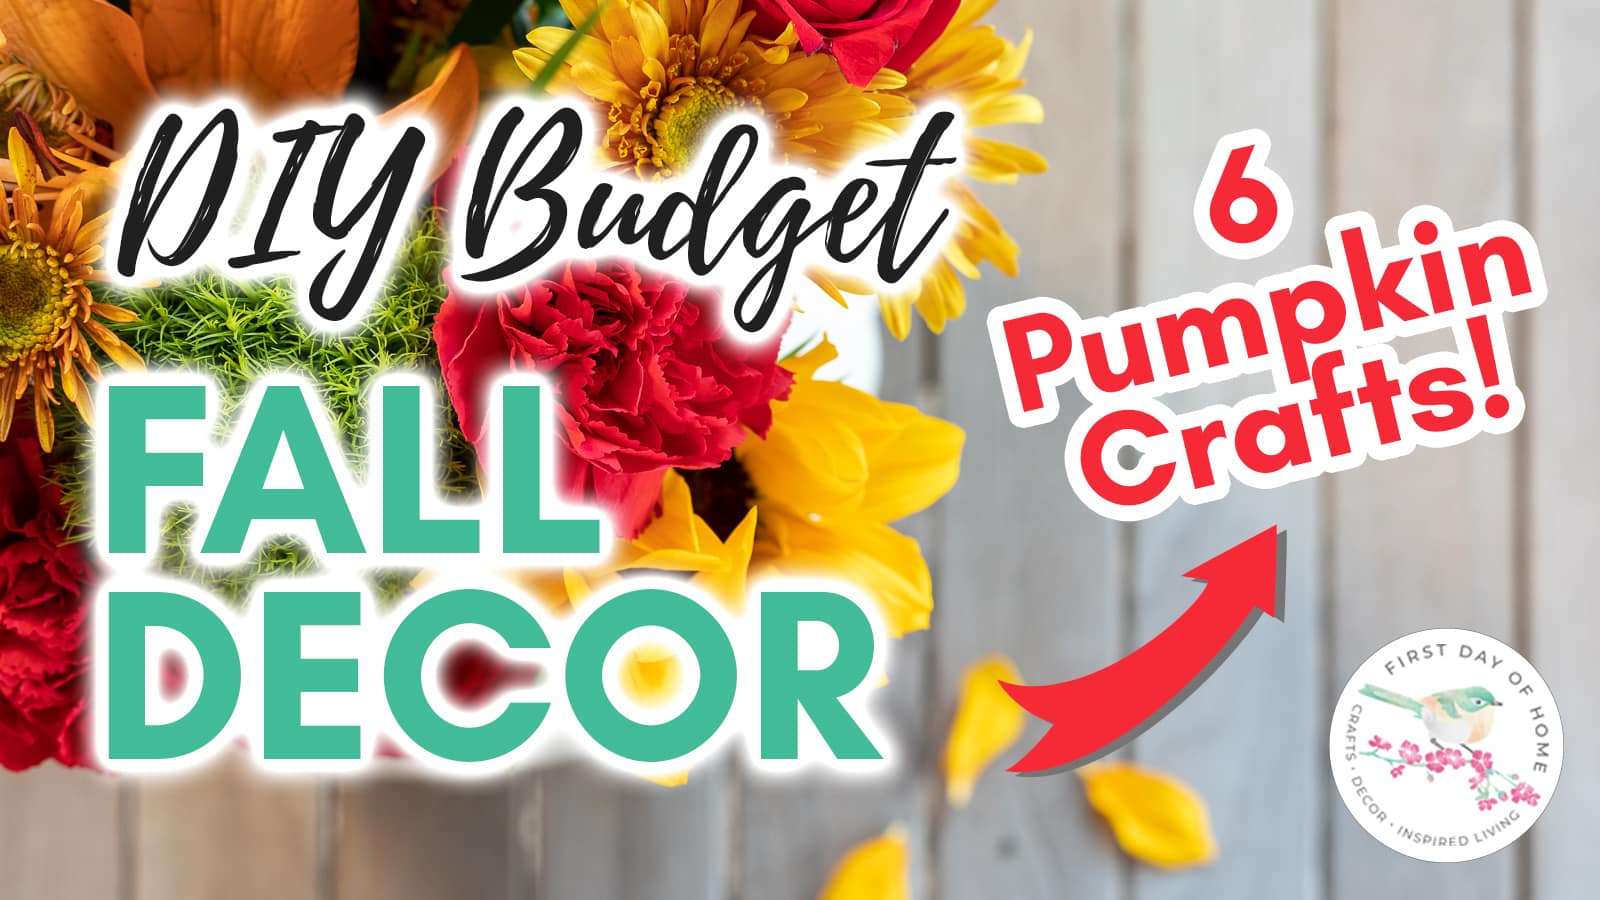 YouTube thumbnail with pumpkin flower arrangement and text overlay reading "DIY Budget Fall Decor: 6 Pumpkin Crafts"